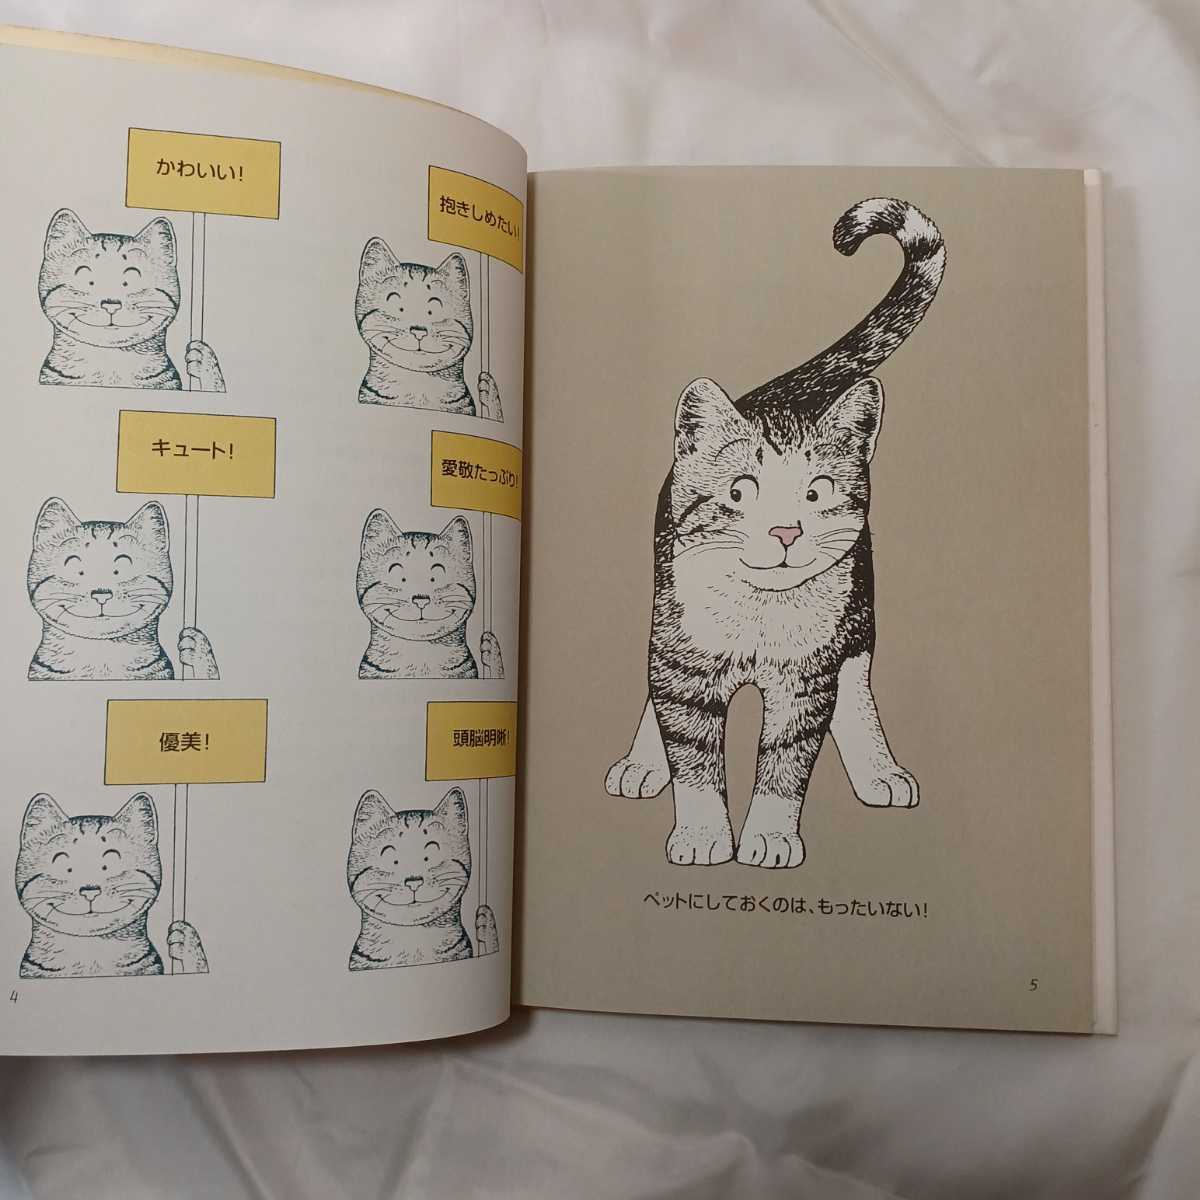 zaa-323♪猫のバイブル2冊セット　猫語の教科書(ちくま書房 )ポール・ギャリコ (著)+わがままな猫と暮らす方法 スティーブン ベーカー(著)_画像5